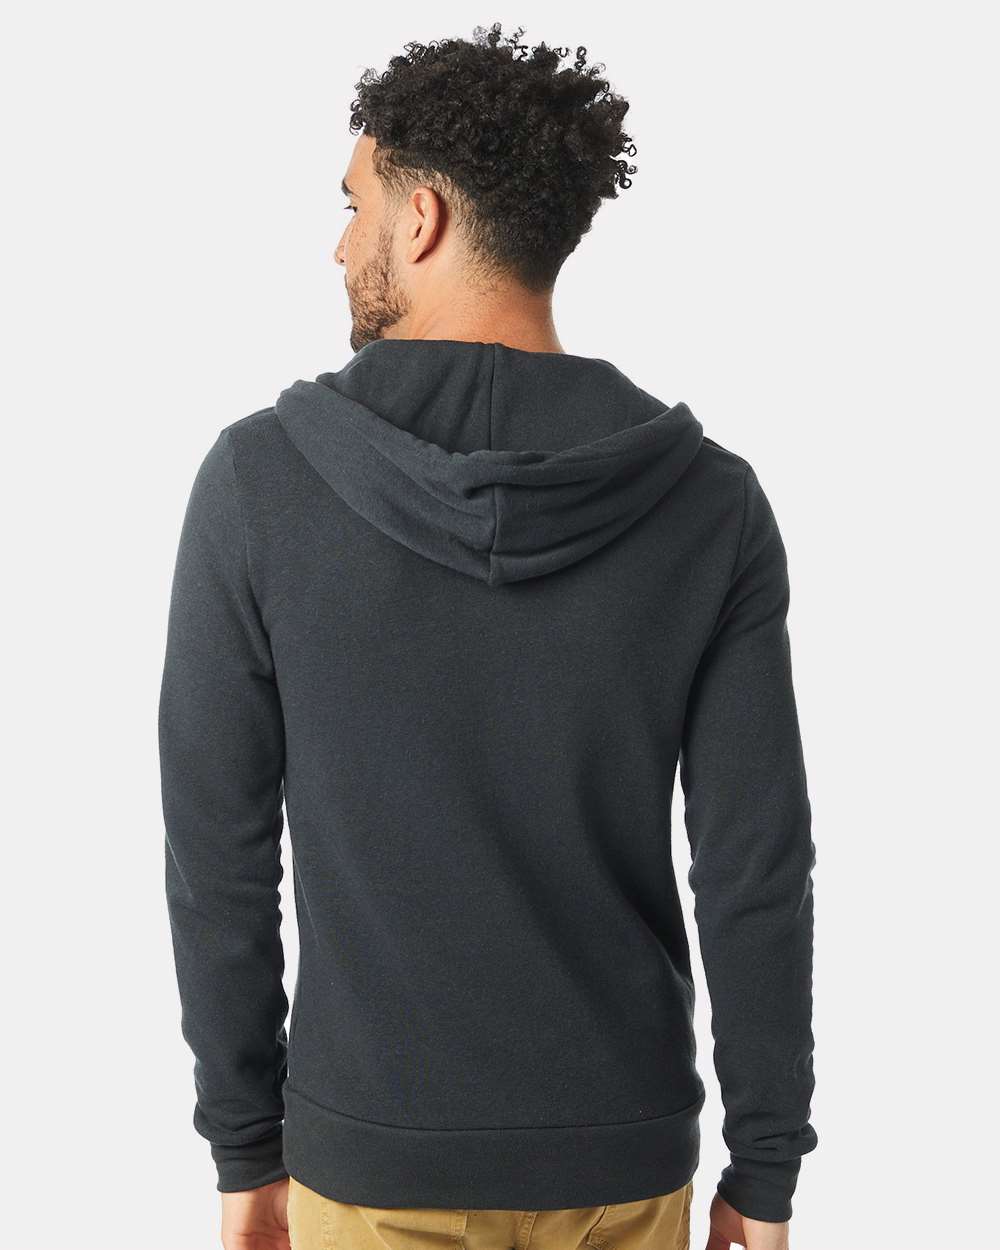 Alternative Rocky Eco-Fleece Full-Zip Hooded Sweatshirt 9590 #colormdl_Eco True Black